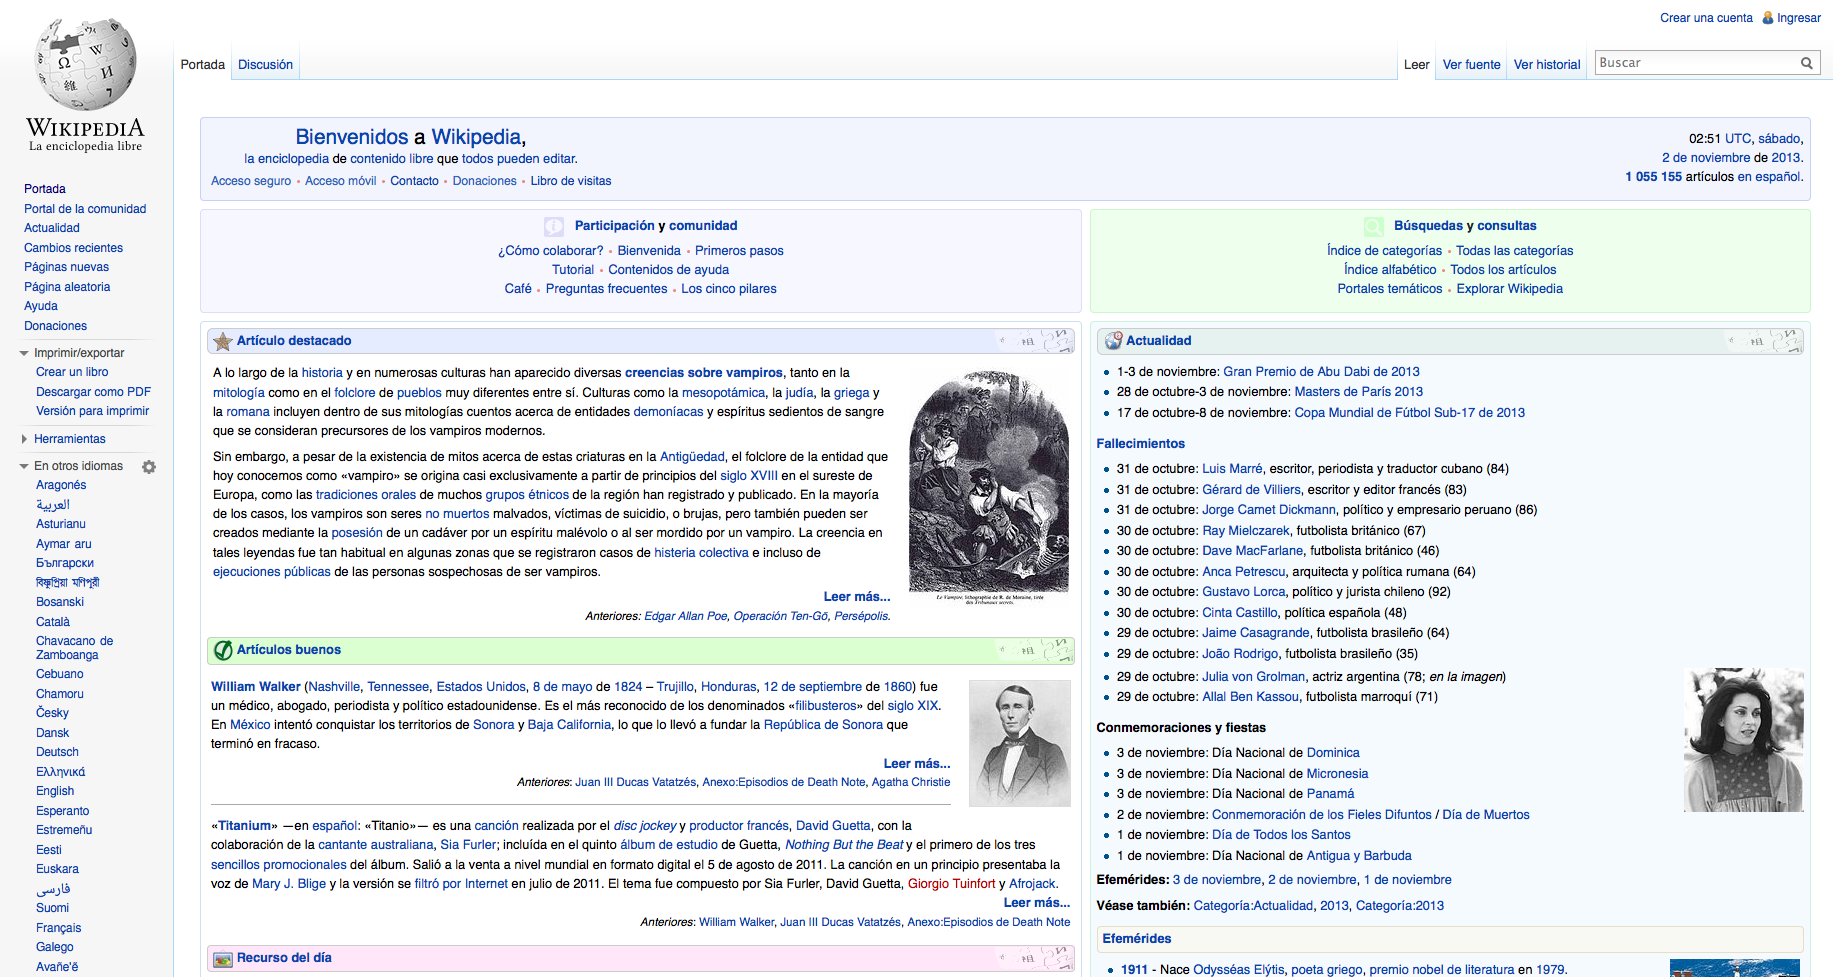 wikipedia-oldskull